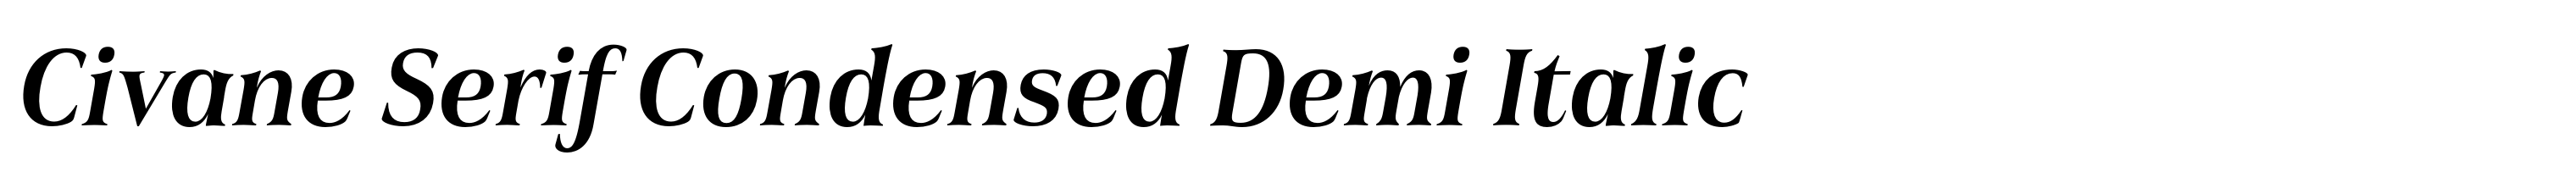 Civane Serif Condensed Demi Italic